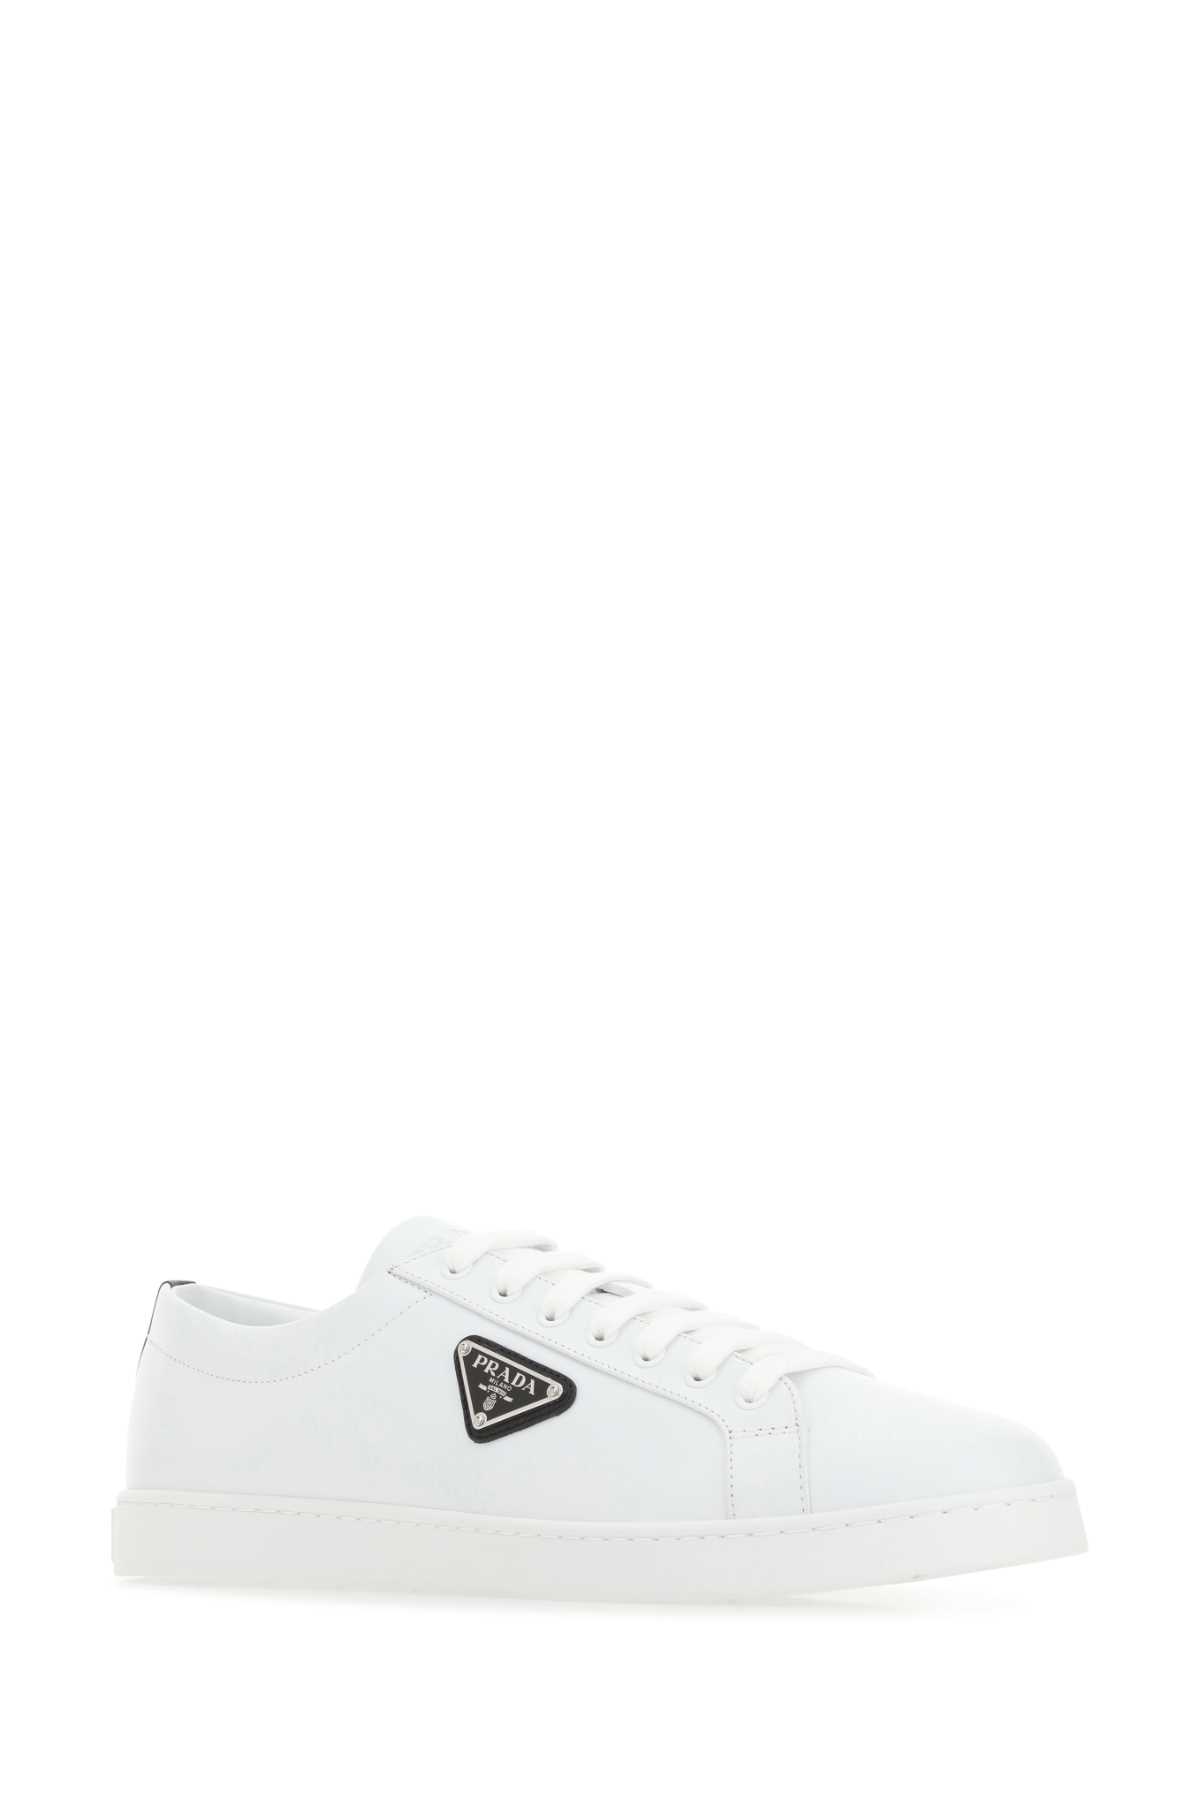 Shop Prada White Leather Sneakers In Multicolor